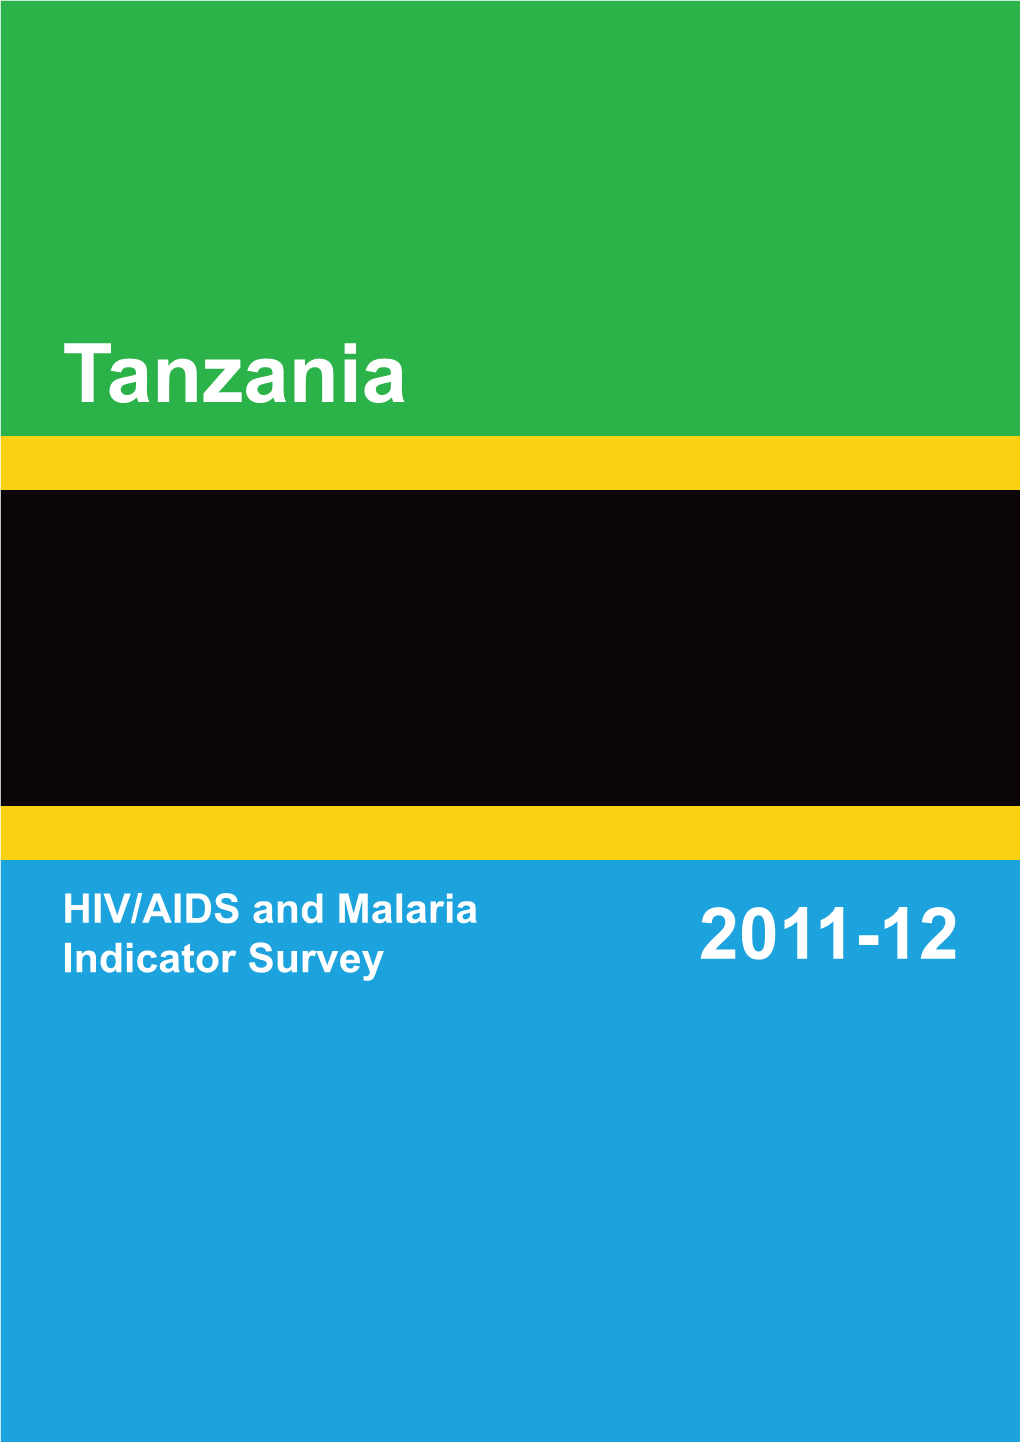 Tanzania HIV/AIDS and Malaria Indicator Survey 2011-12 [AIS11]